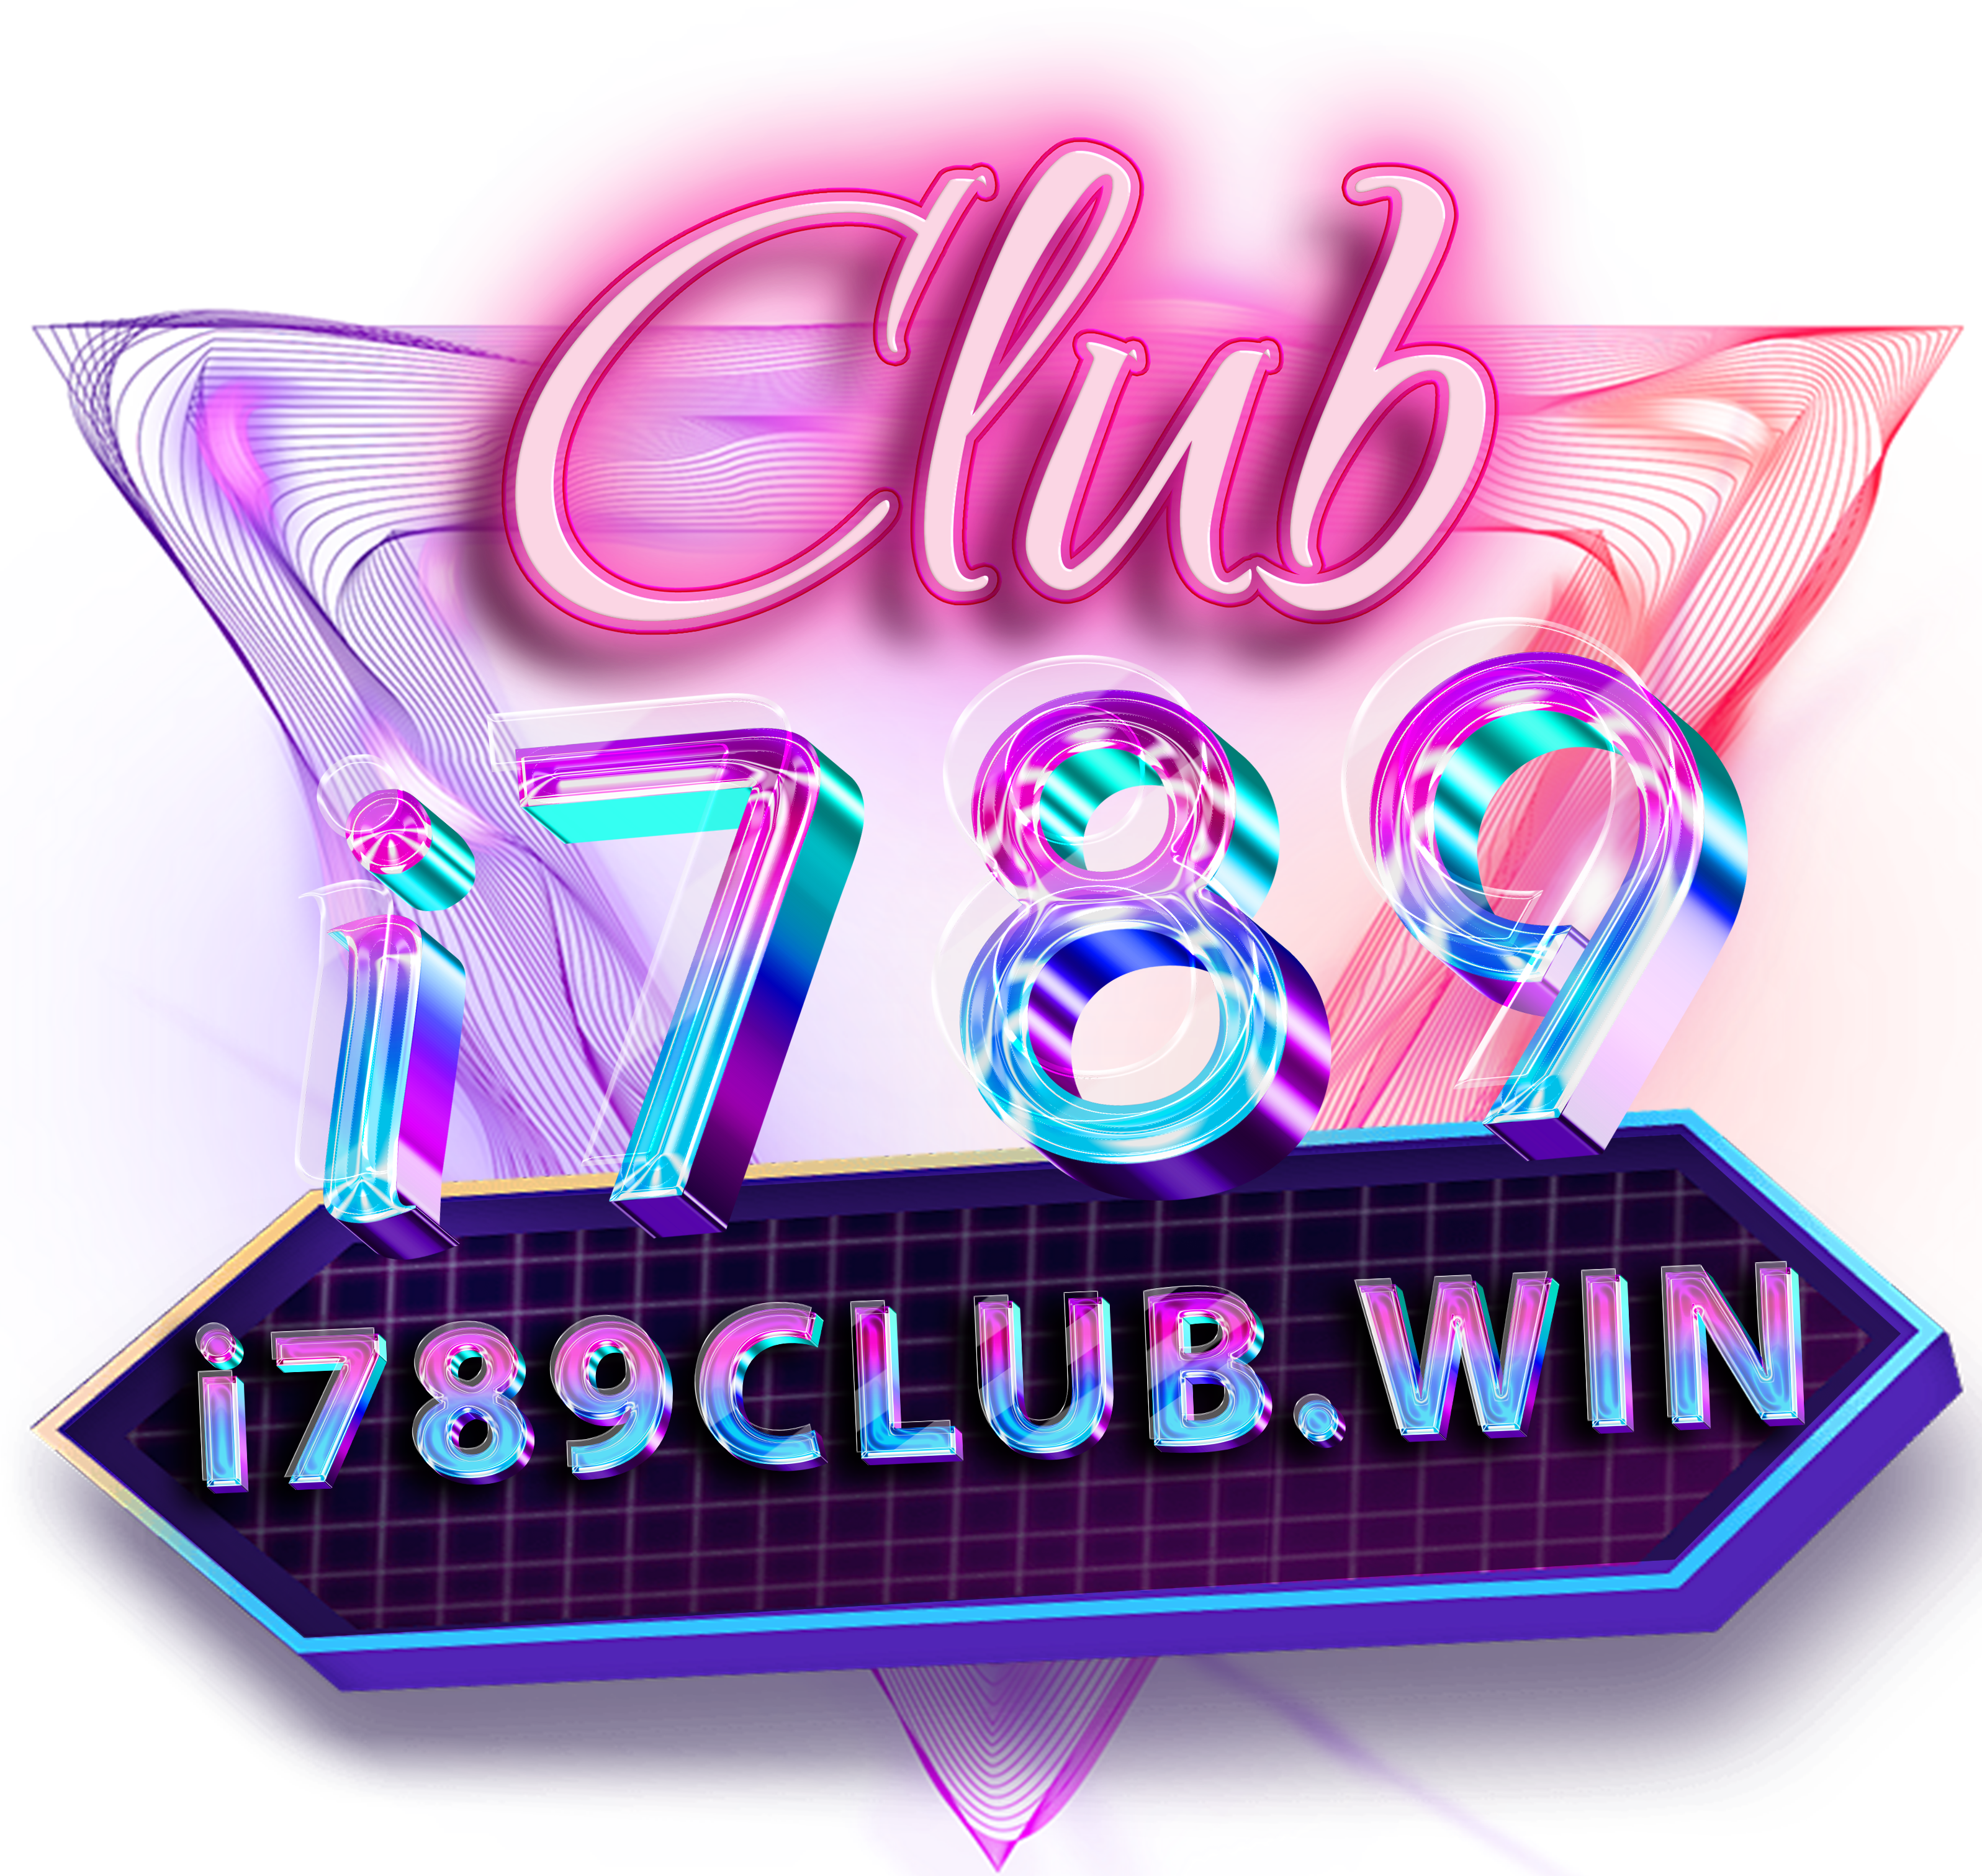 logo i789club.win